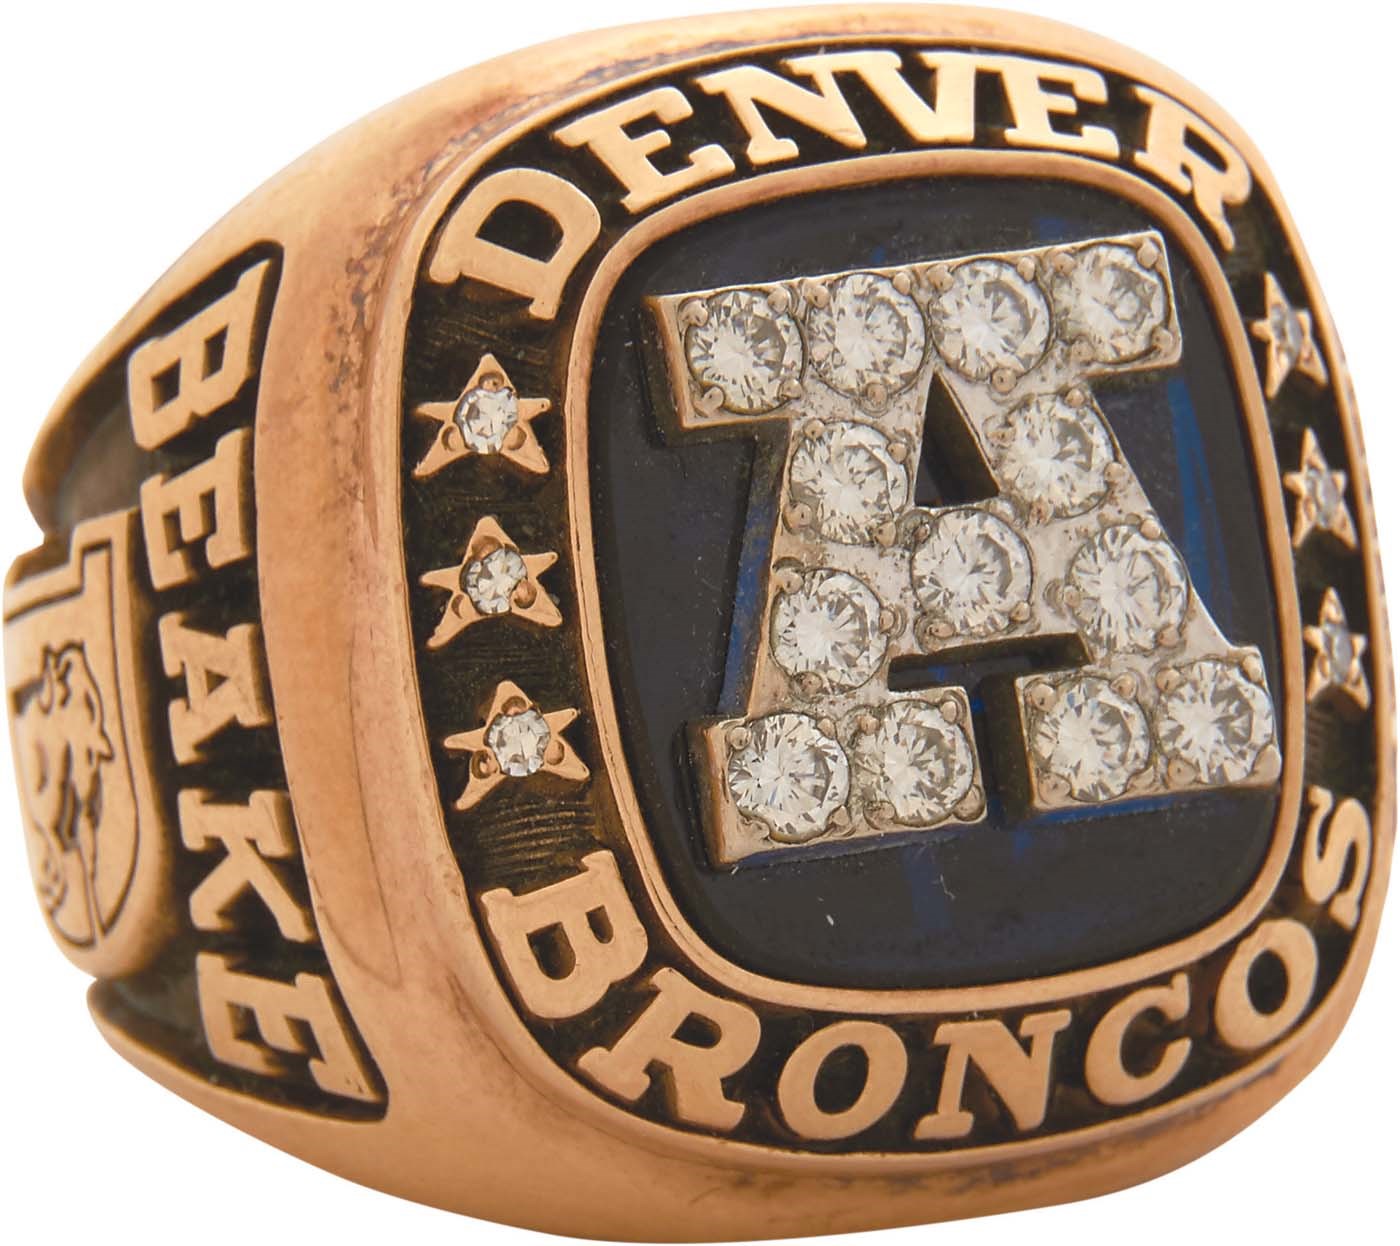 Sports Rings And Awards - 1986 Denver Broncos AFC Championship Ring Presented to GM John Beake